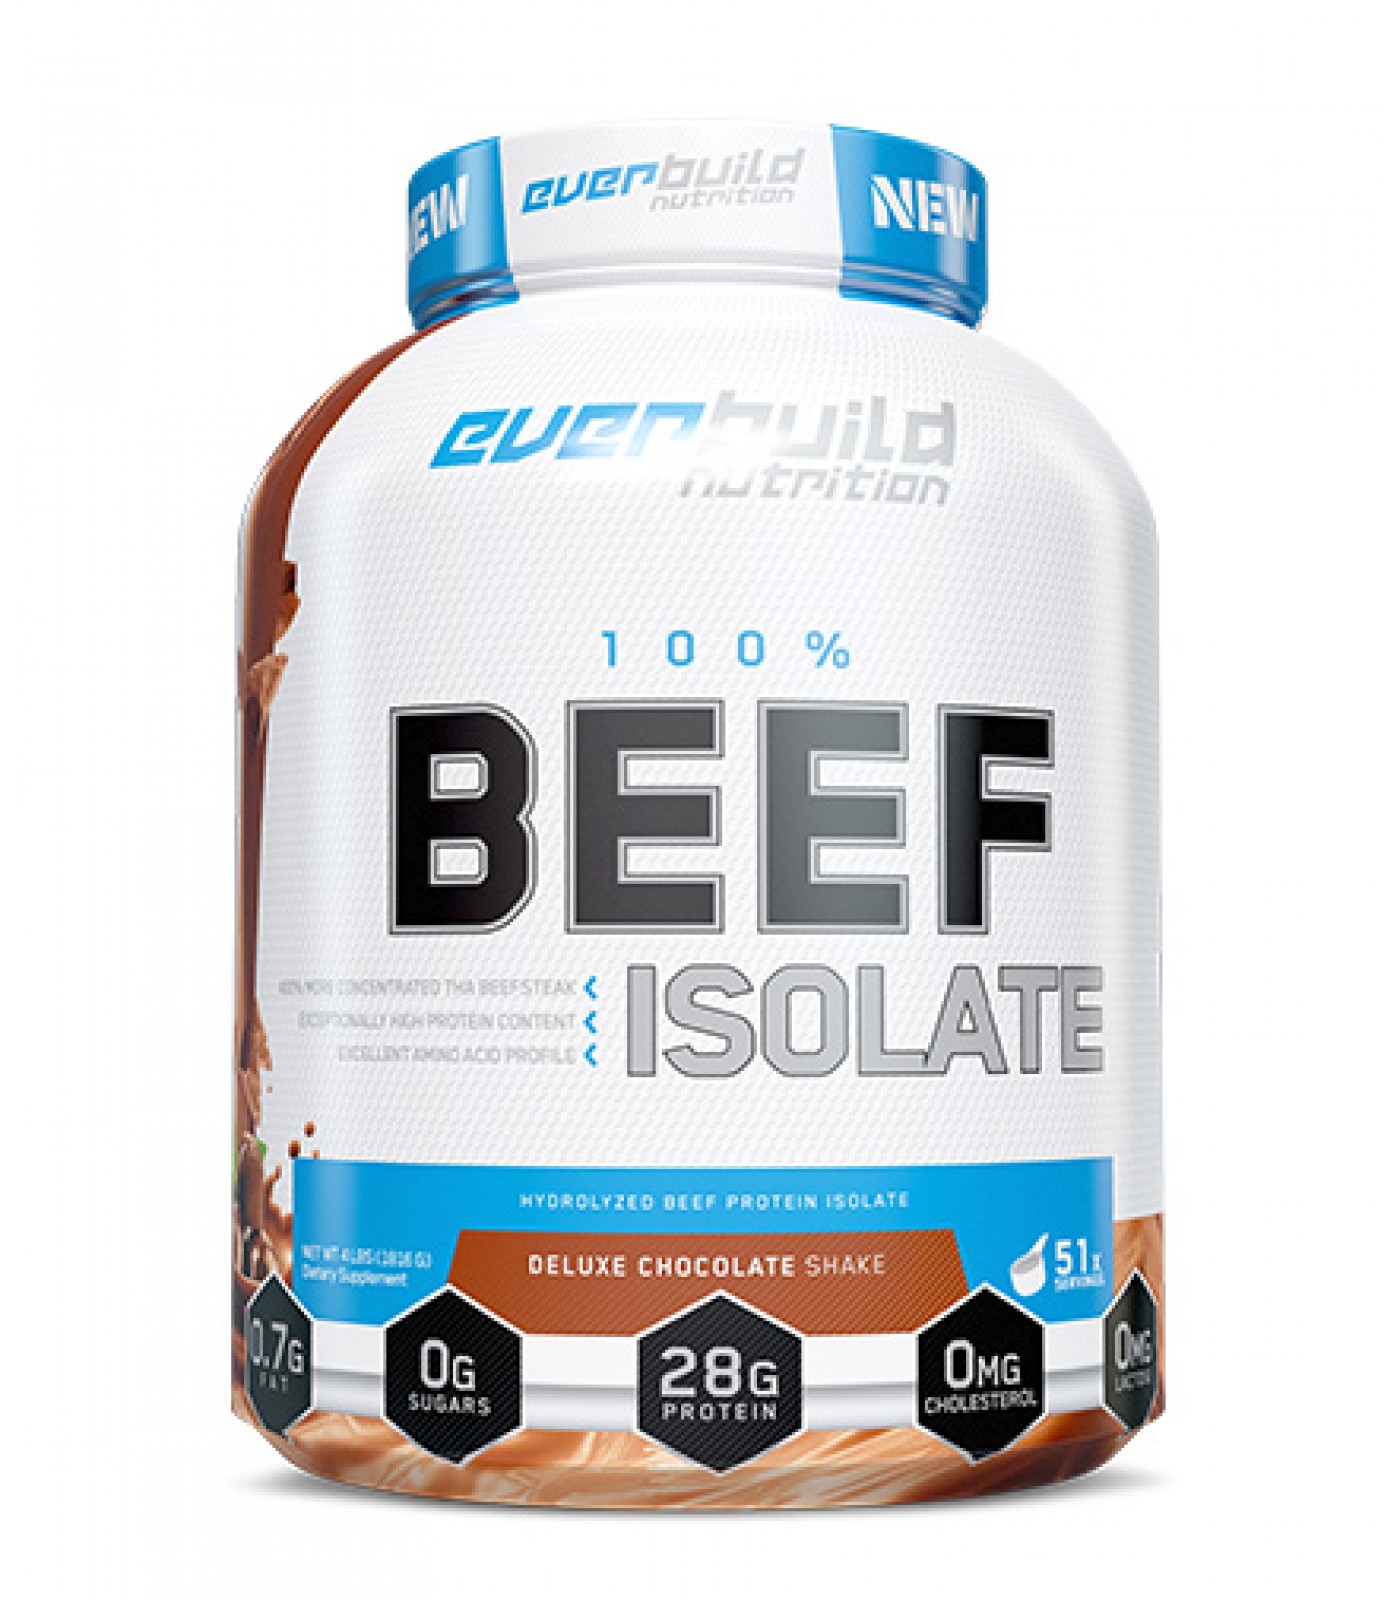 EVERBUILD - Ultra Premium 100% Beef Isolate / 4lbs.